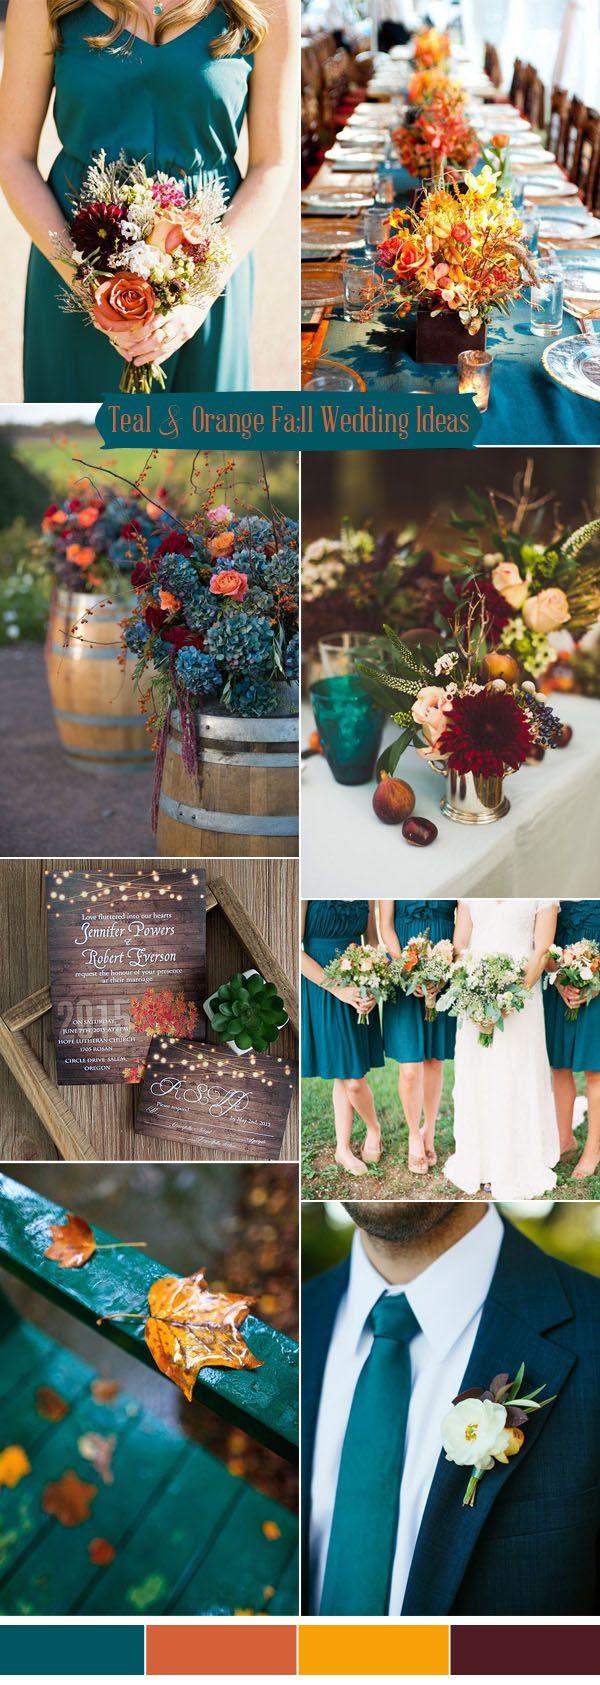 زفاف - Ten Prettiest Shades Of Blue For 2017 Wedding Color Ideas